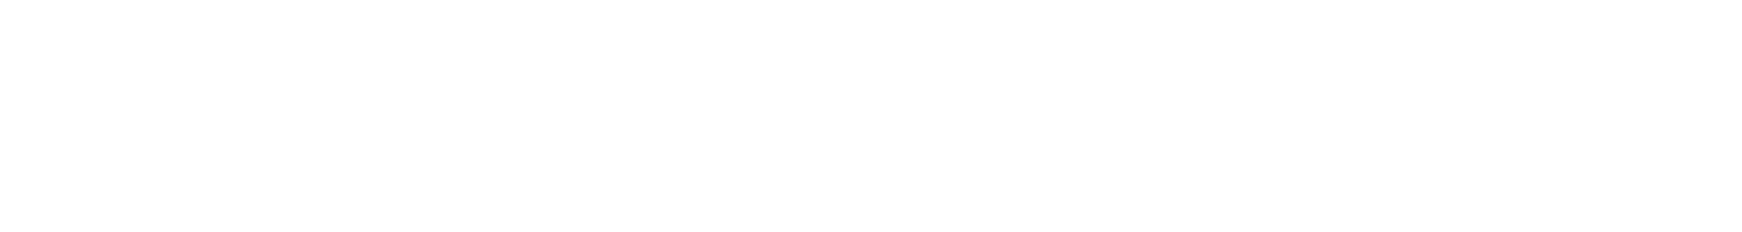 Logo principal - Misubsidio.com